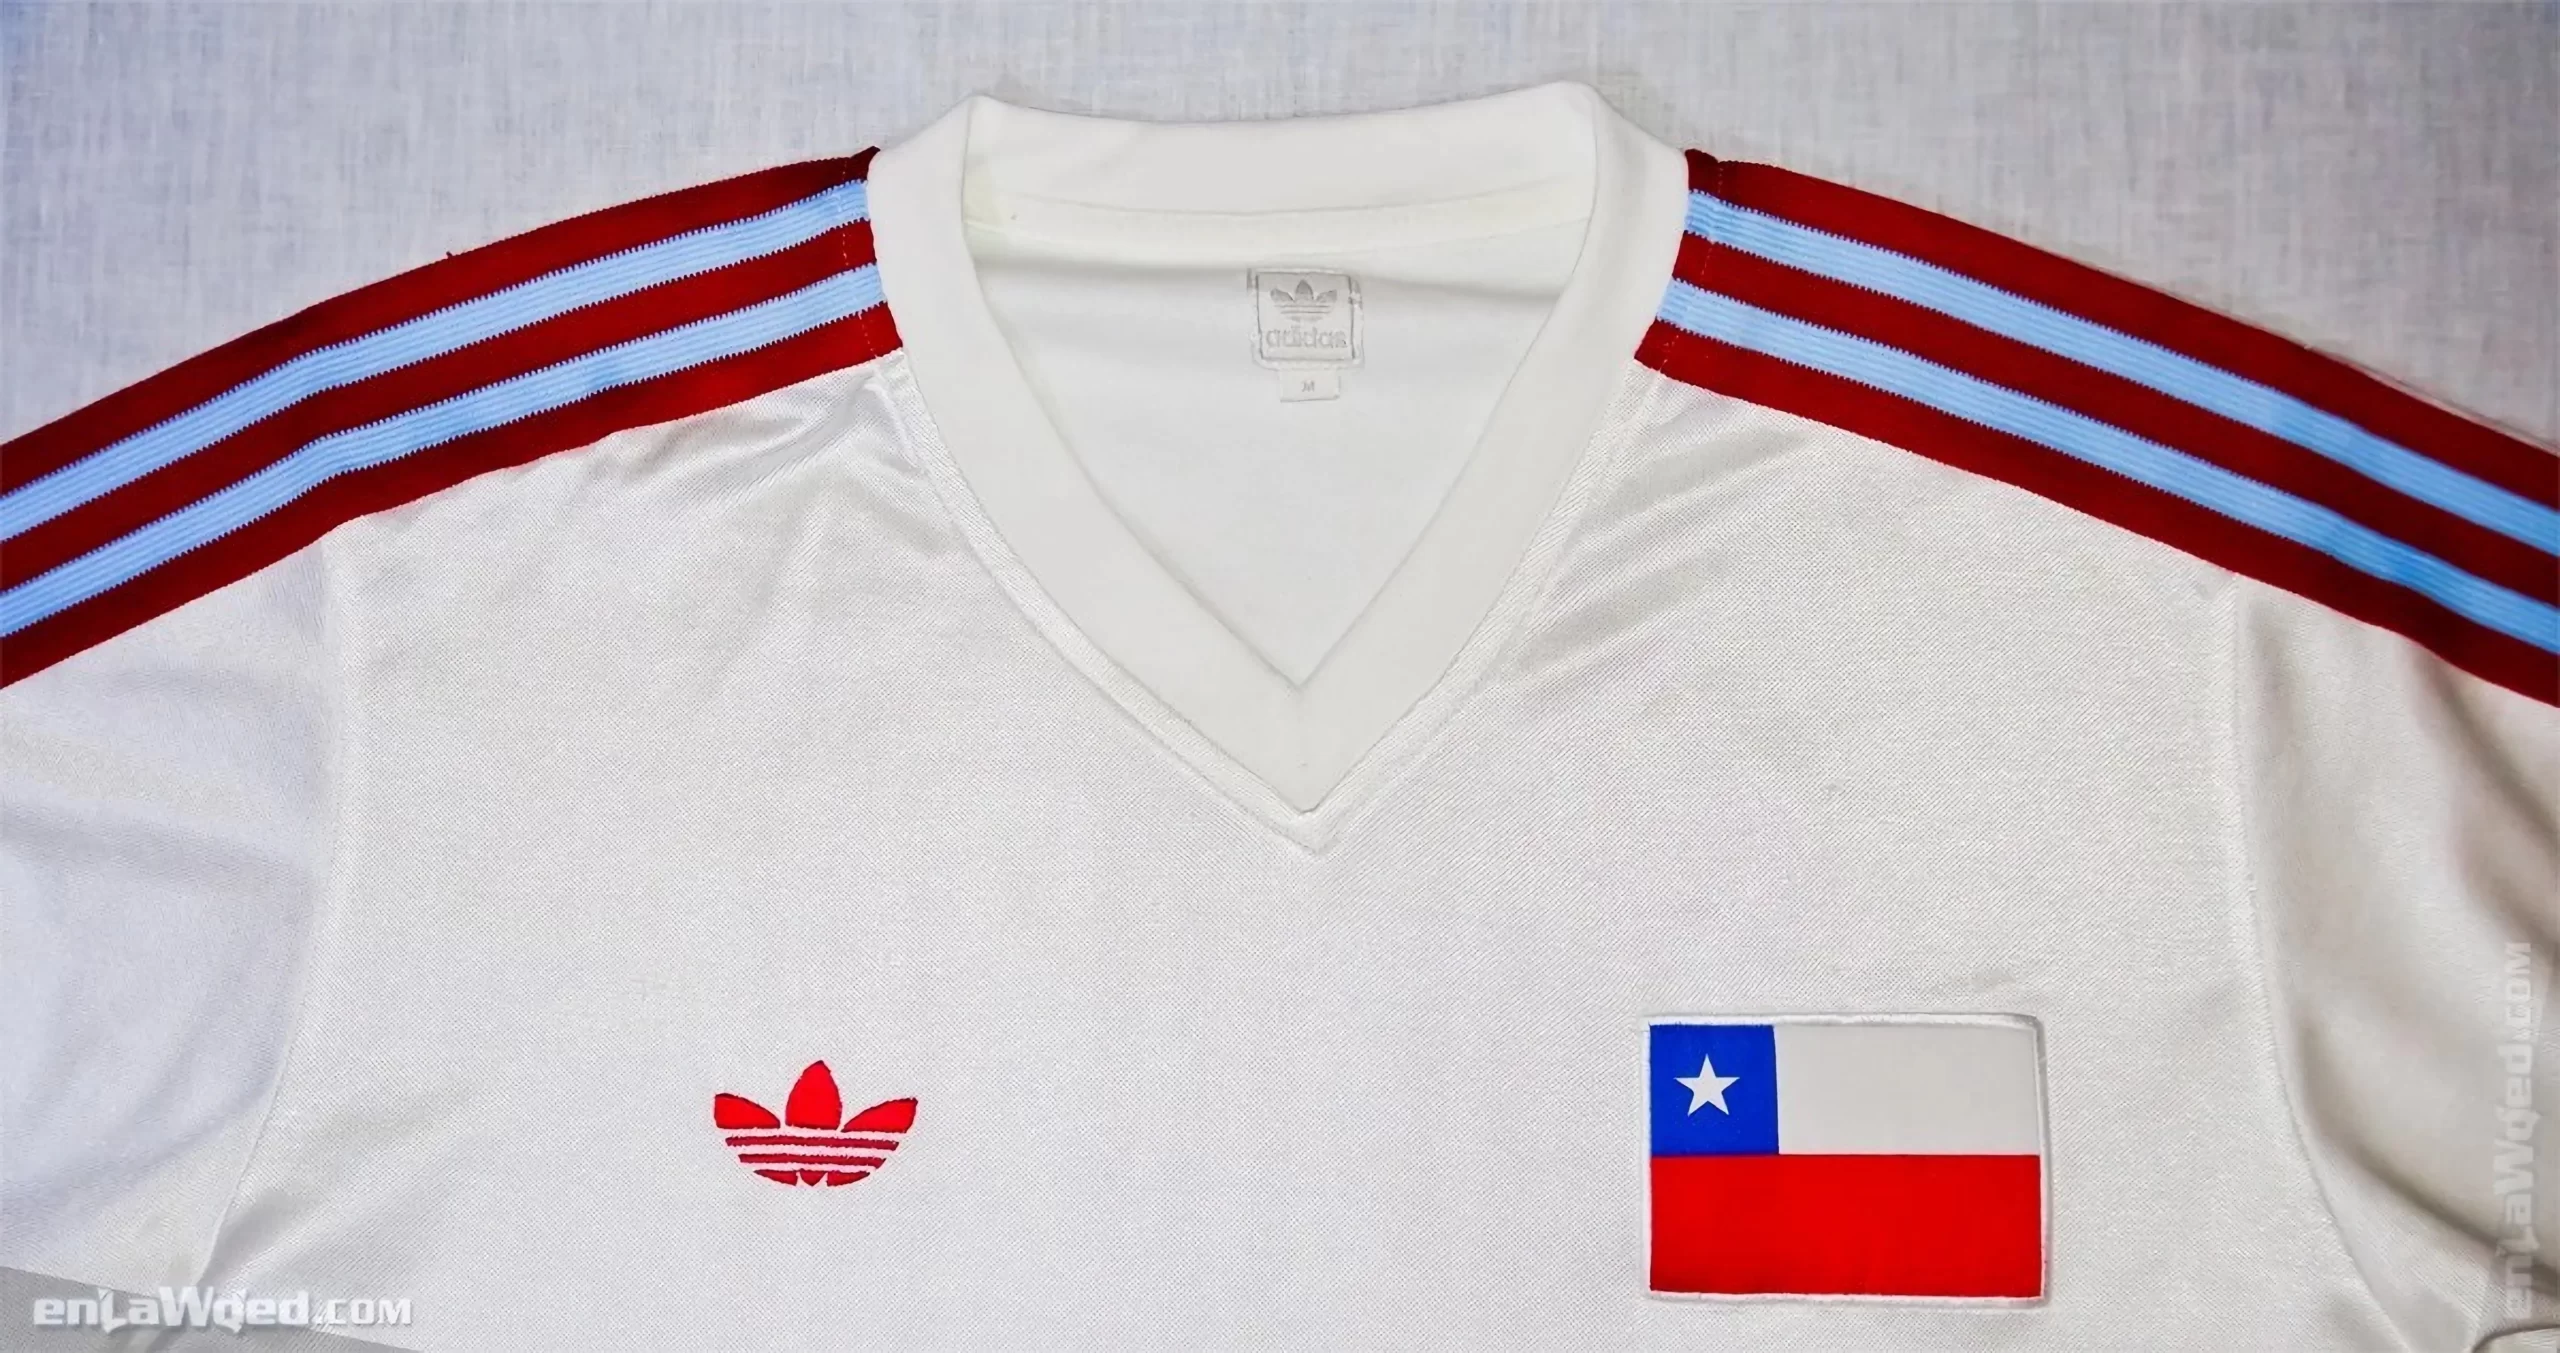 Men’s 2003 Chile ’82 Soto Jersey by Adidas Originals: Audacity (EnLawded.com file #lmc4j2j7dv68mt6iqqq)